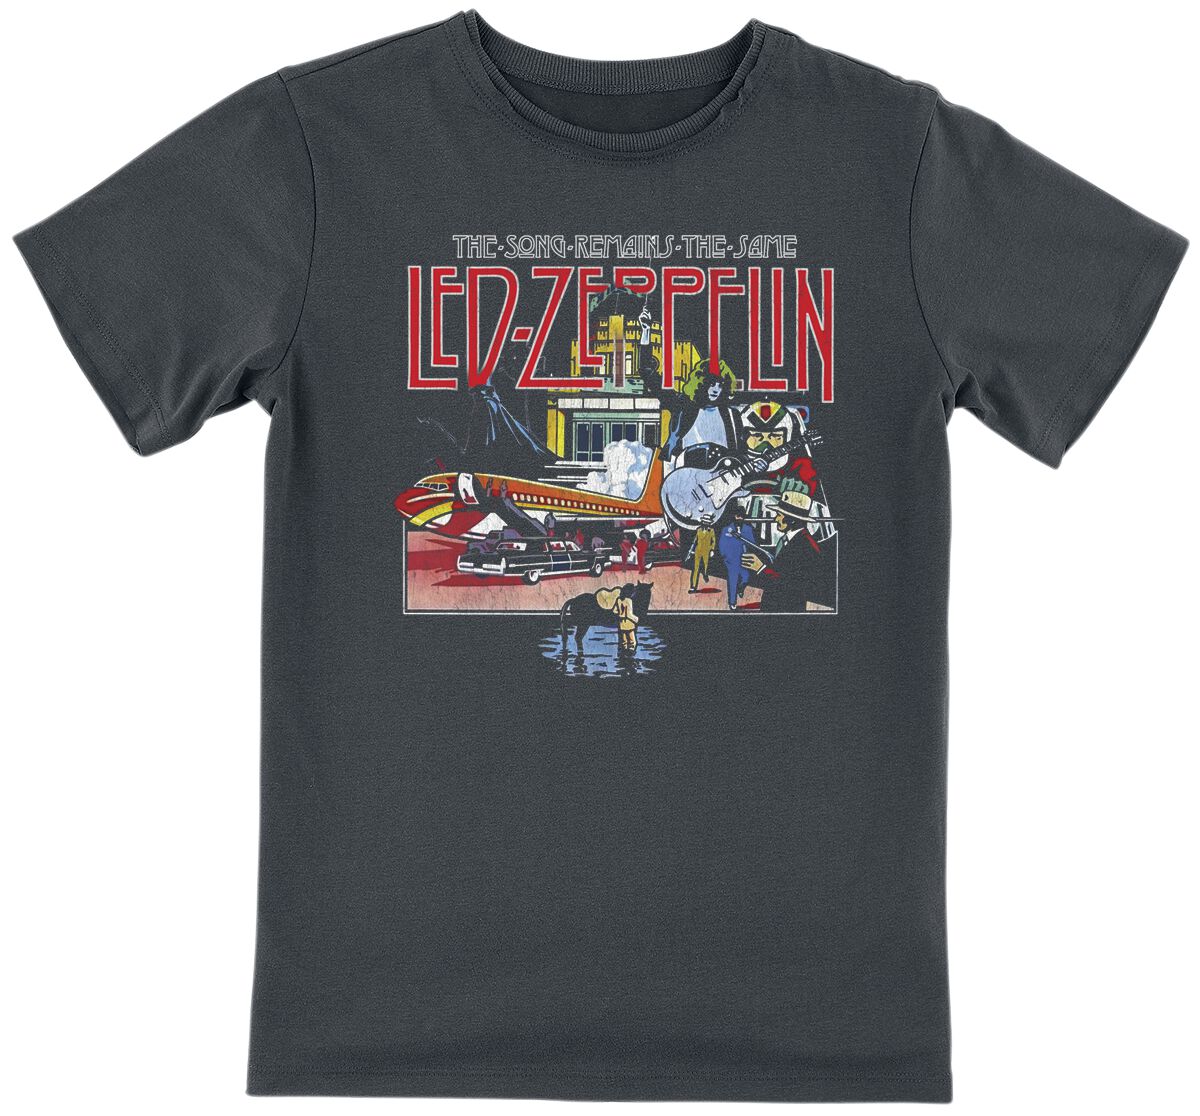 Led Zeppelin T-Shirt für Kleinkinder - Amplified Collection - Kids - The Song Remains The Same Tour - für Mädchen & Jungen - charcoal  - Lizenziertes